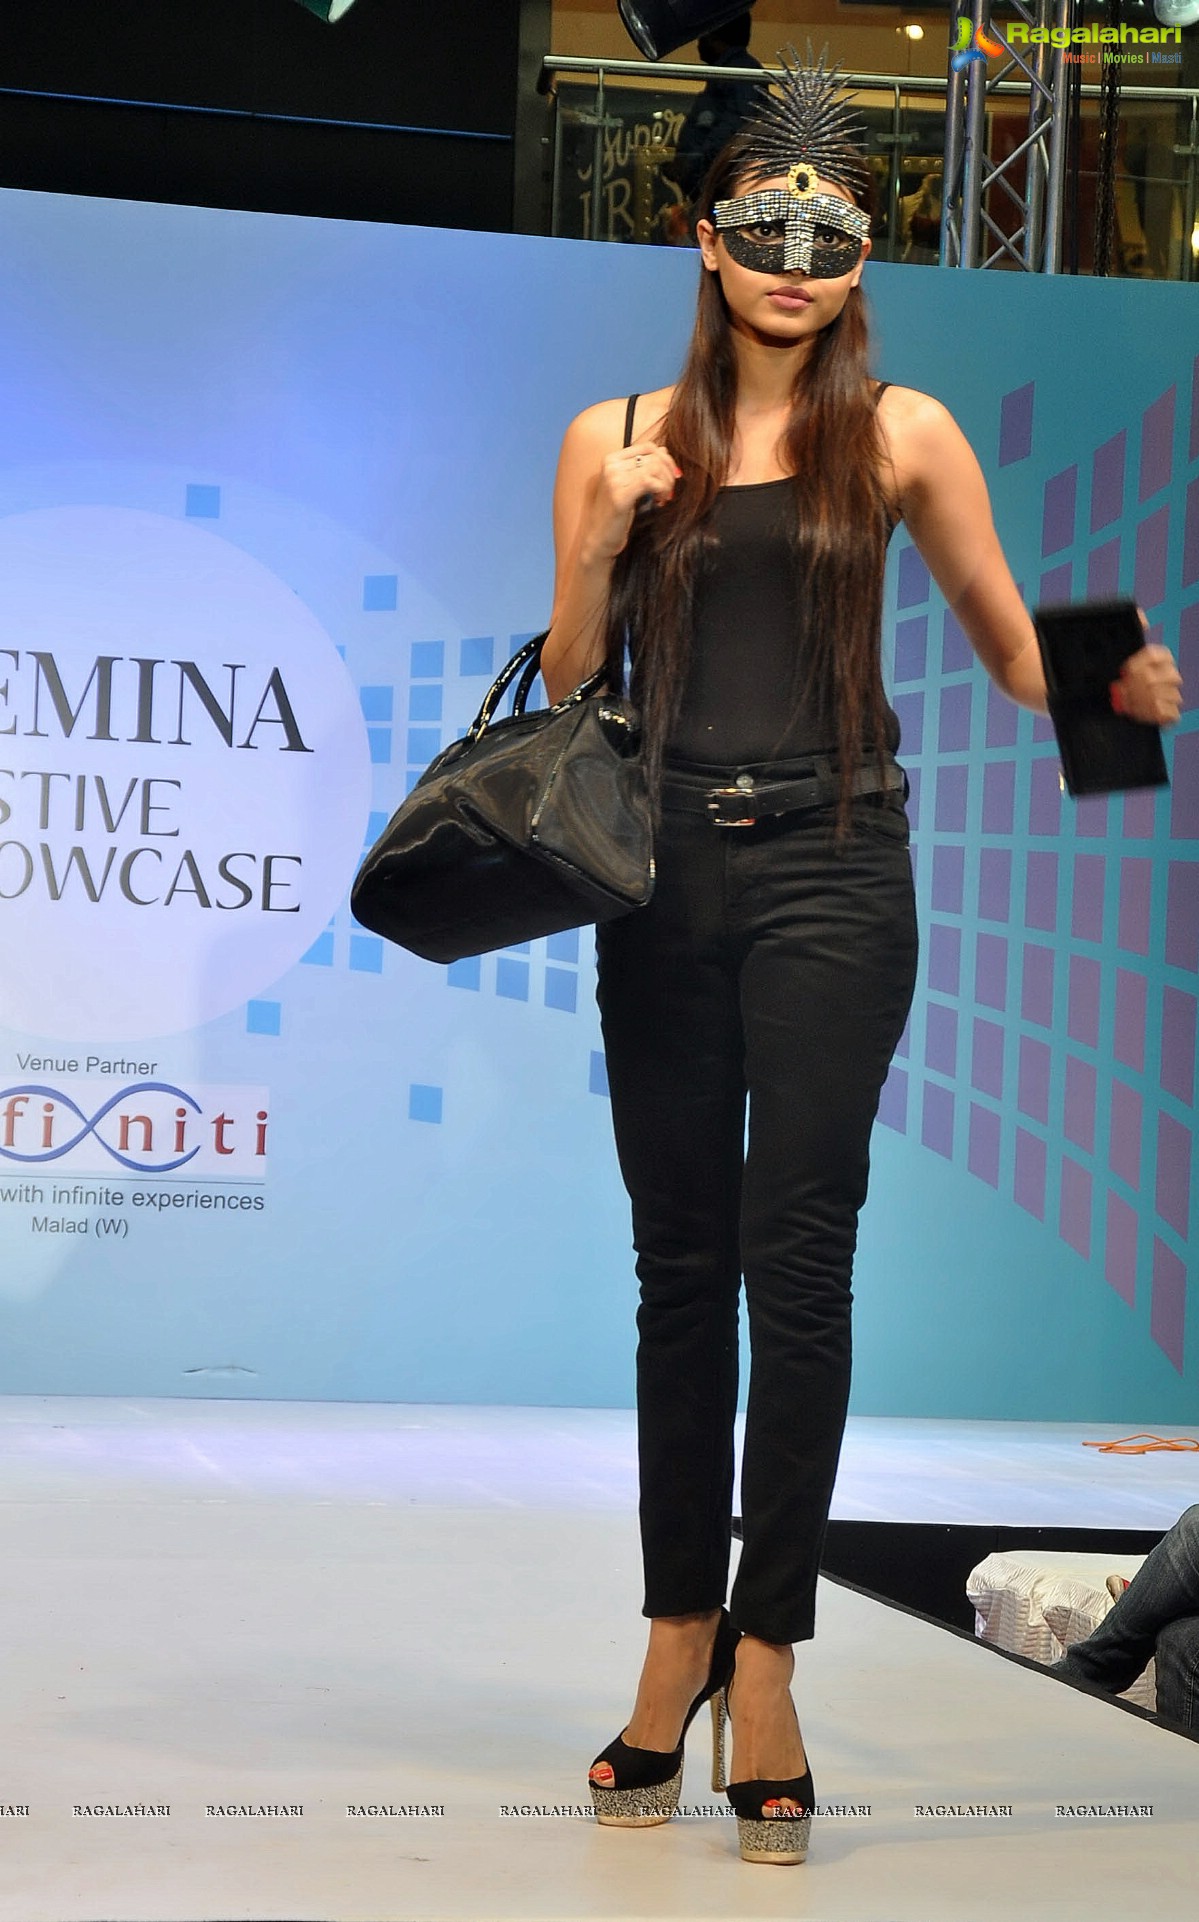 Femina Festive Showcase 2013